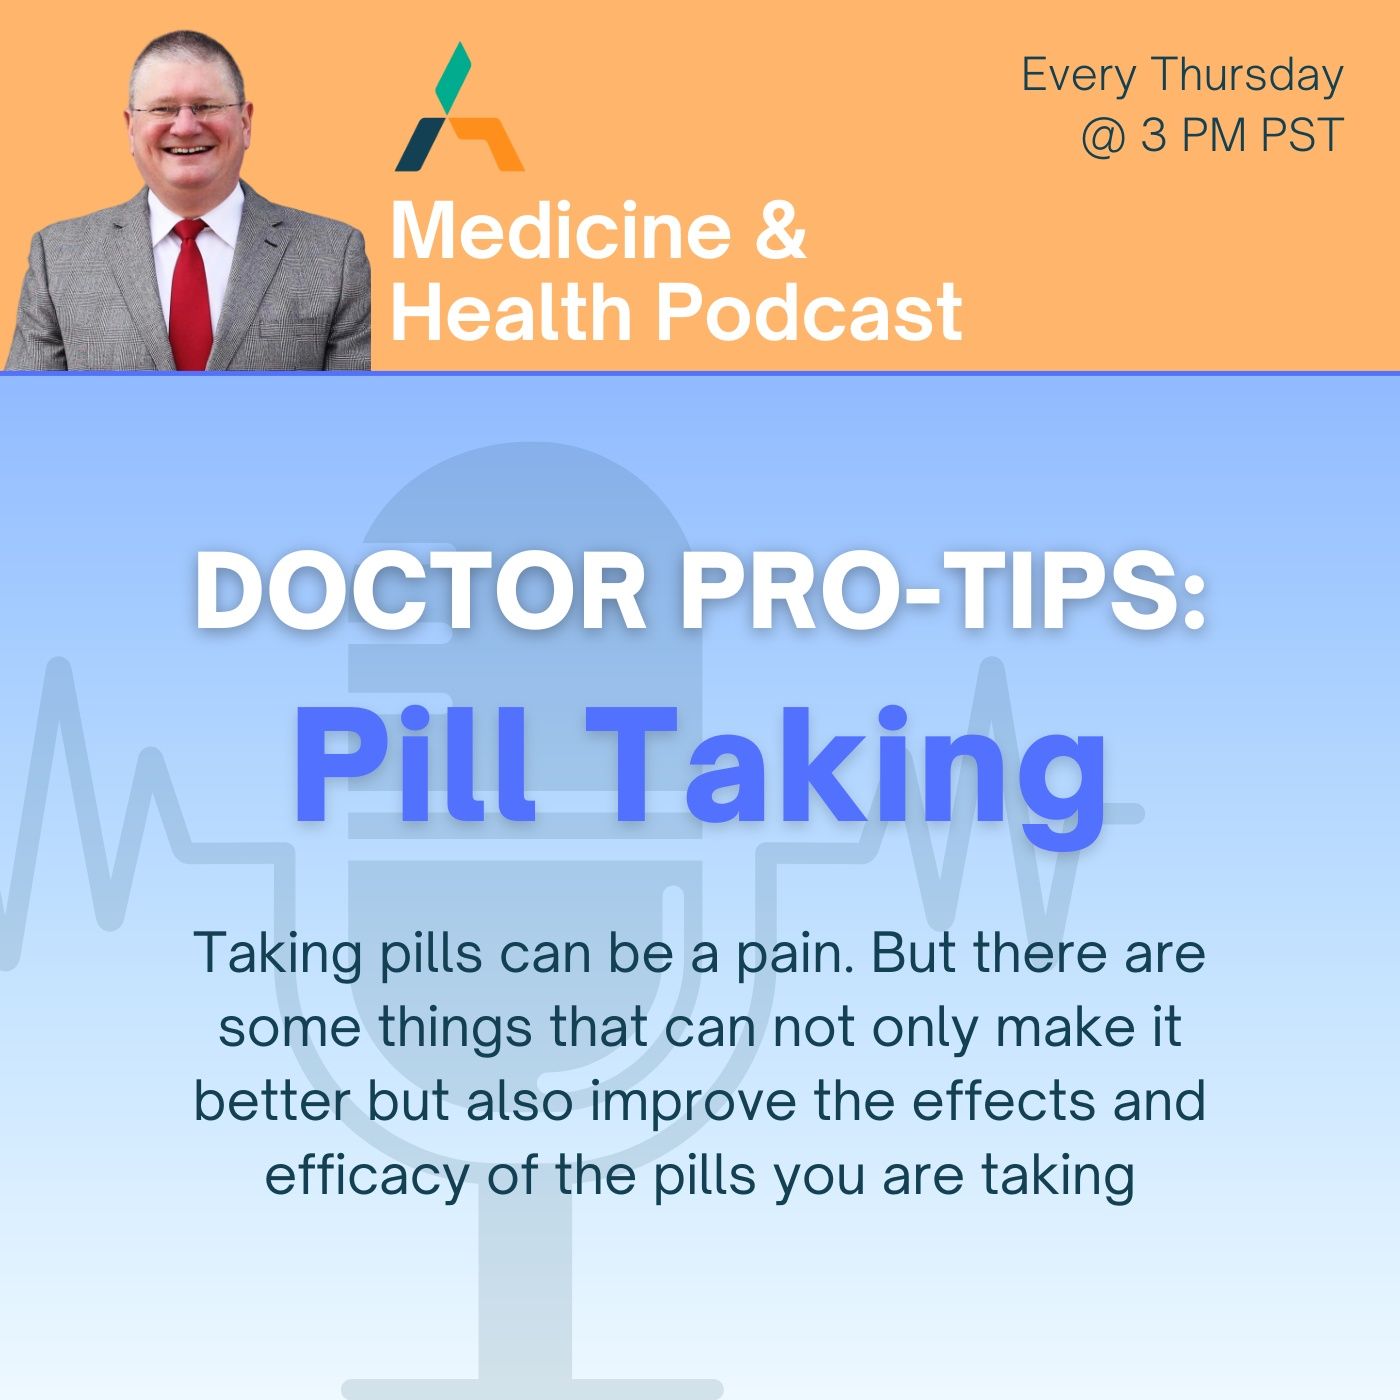 PILL TAKING [Doctor Pro-tips]